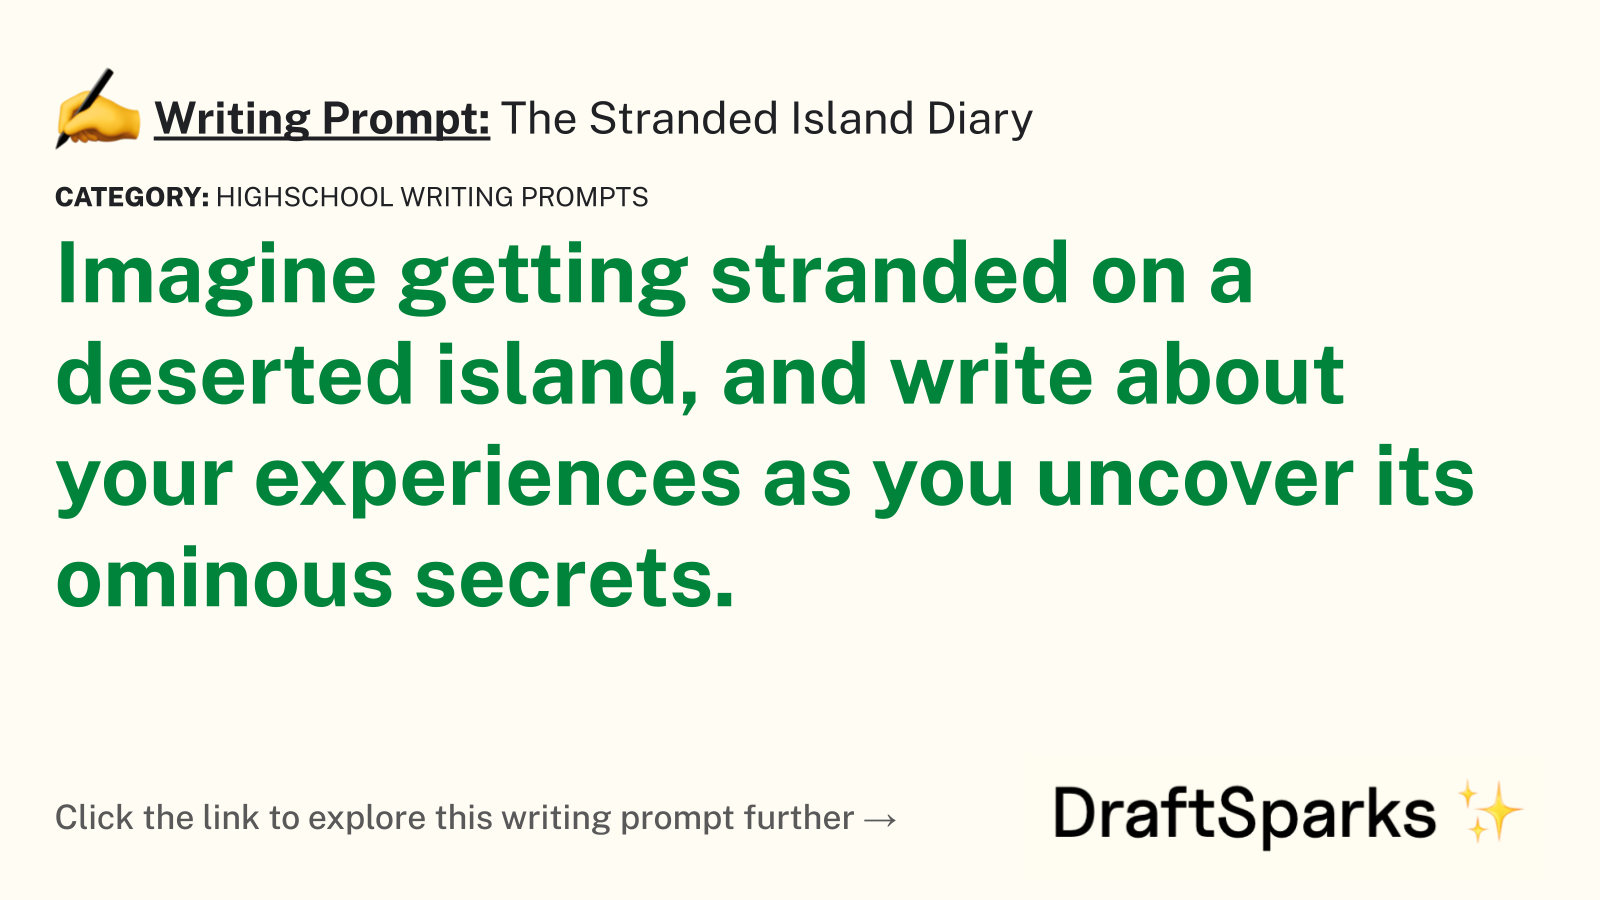 The Stranded Island Diary